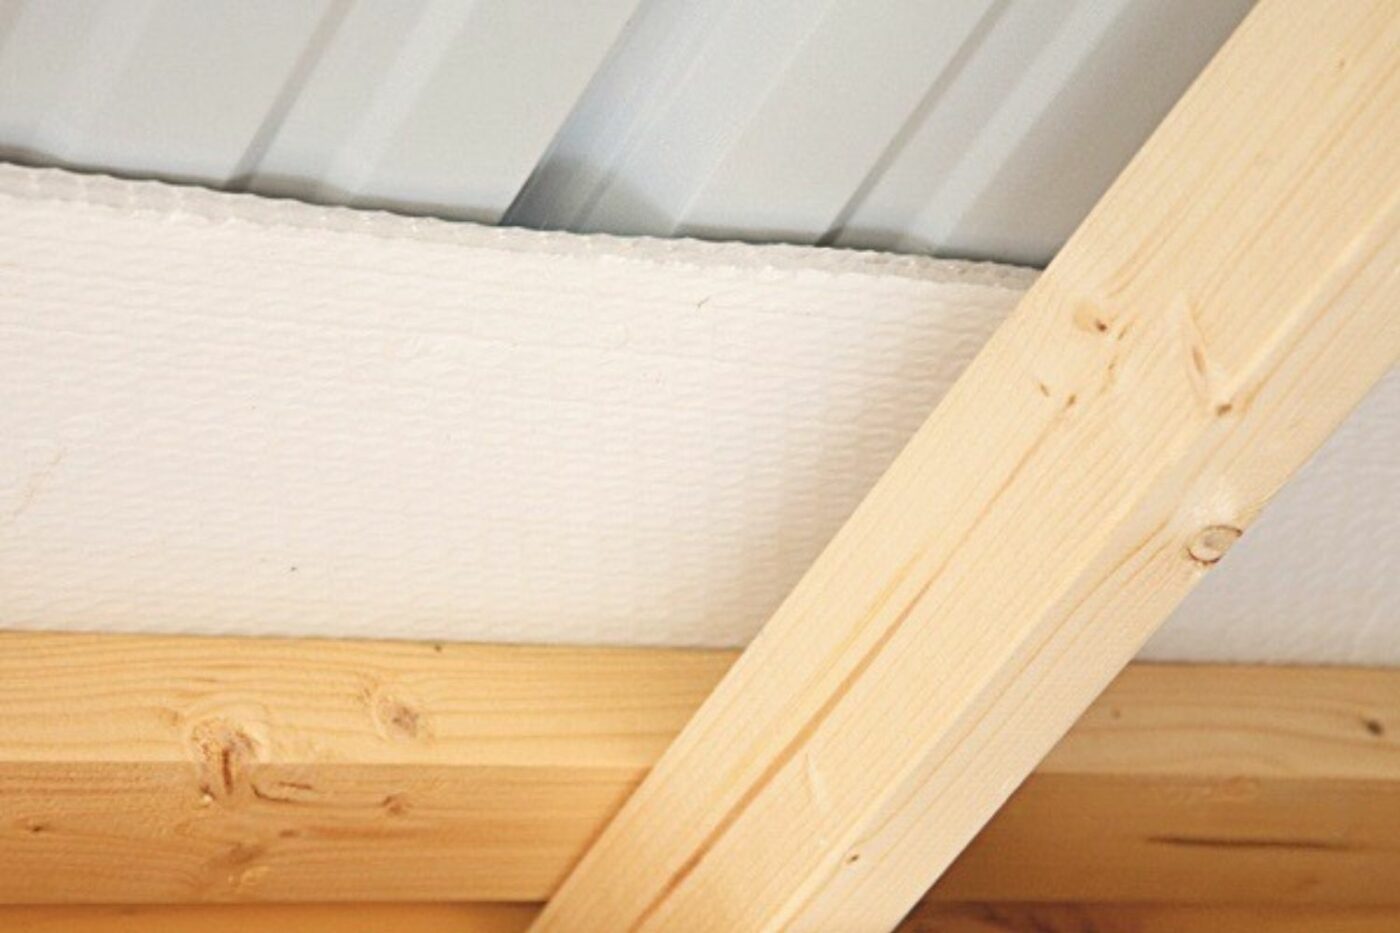 Chicken coop insulation and perch installation : r/chickens